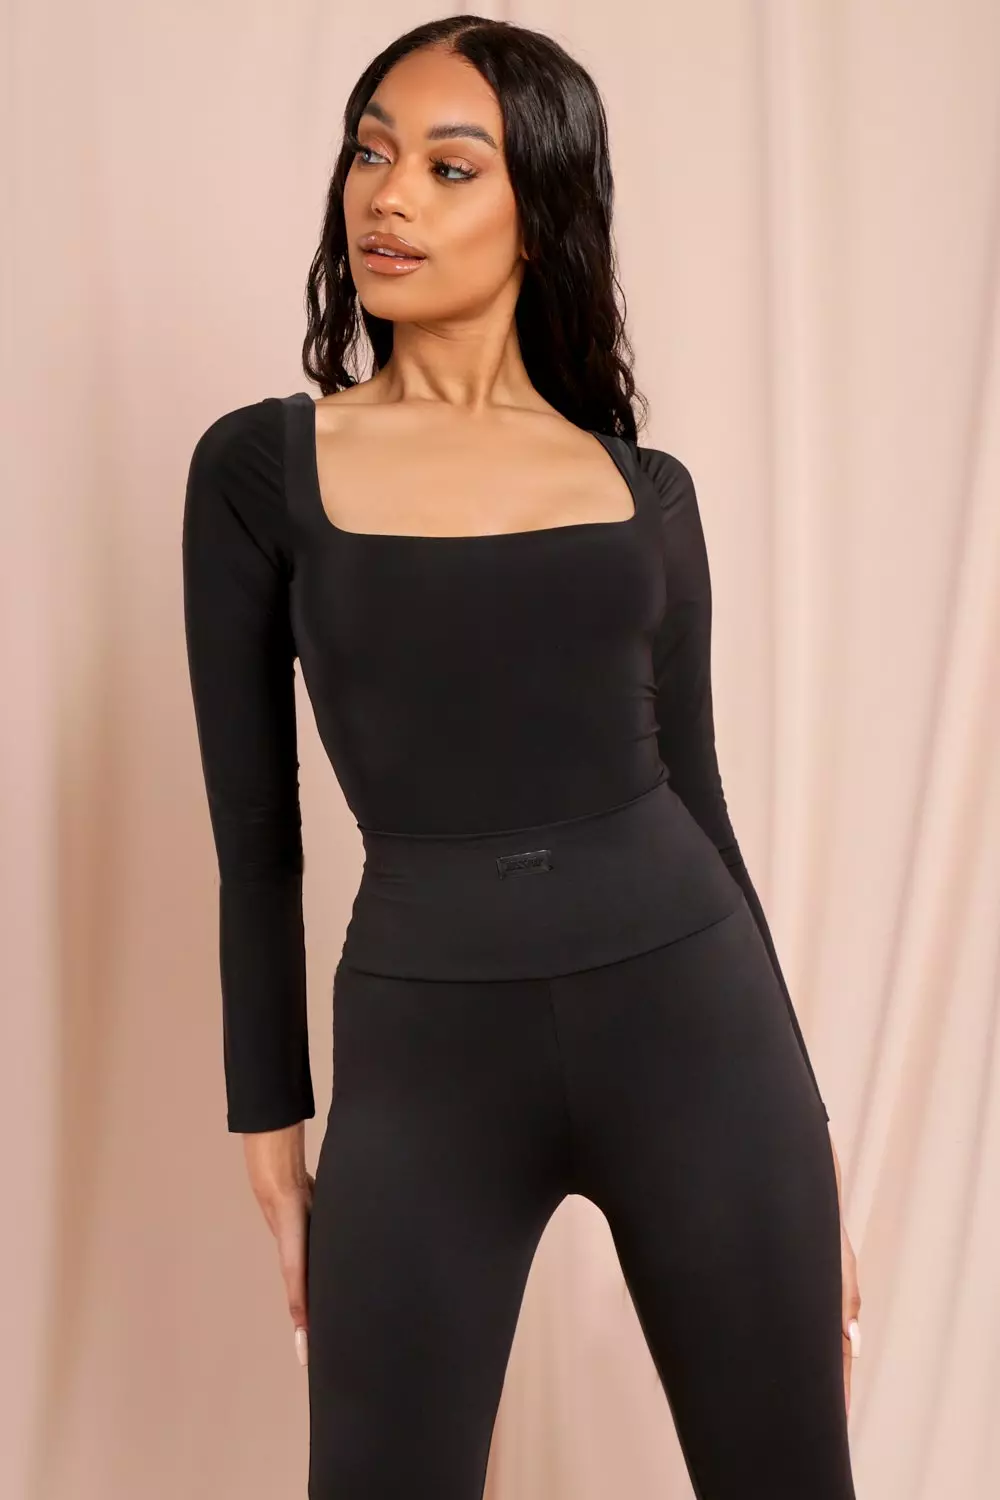 Women's Double-Layered Seamless Fabric Squareneck Bodysuit